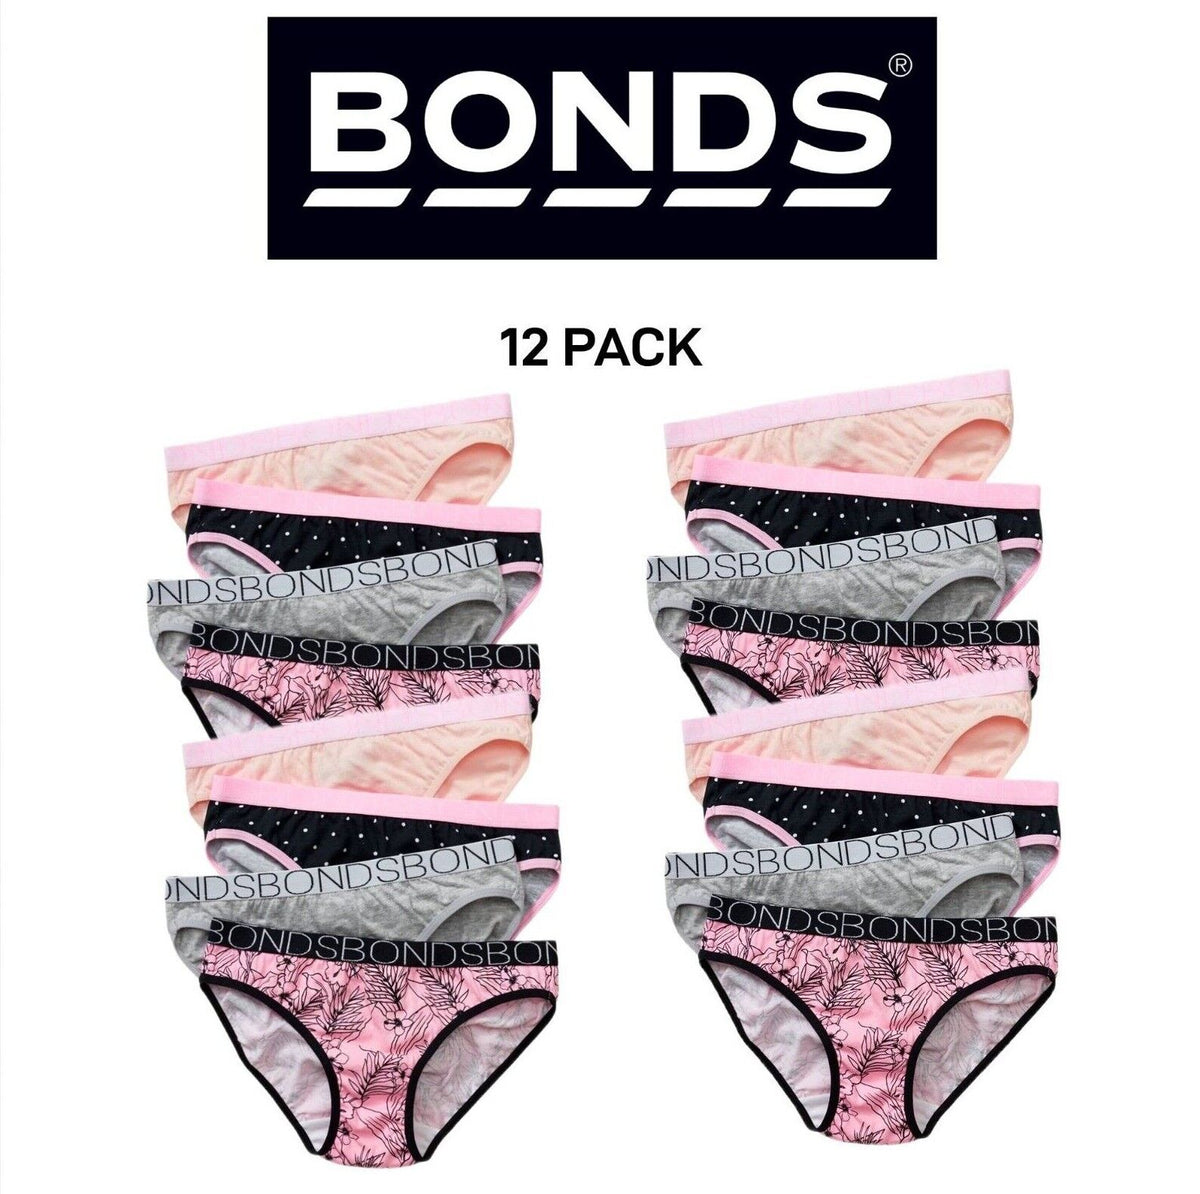 Bonds Girls Bikini Soft Breathable Cotton Comfortable Coverage 12 Pack UXYH4A